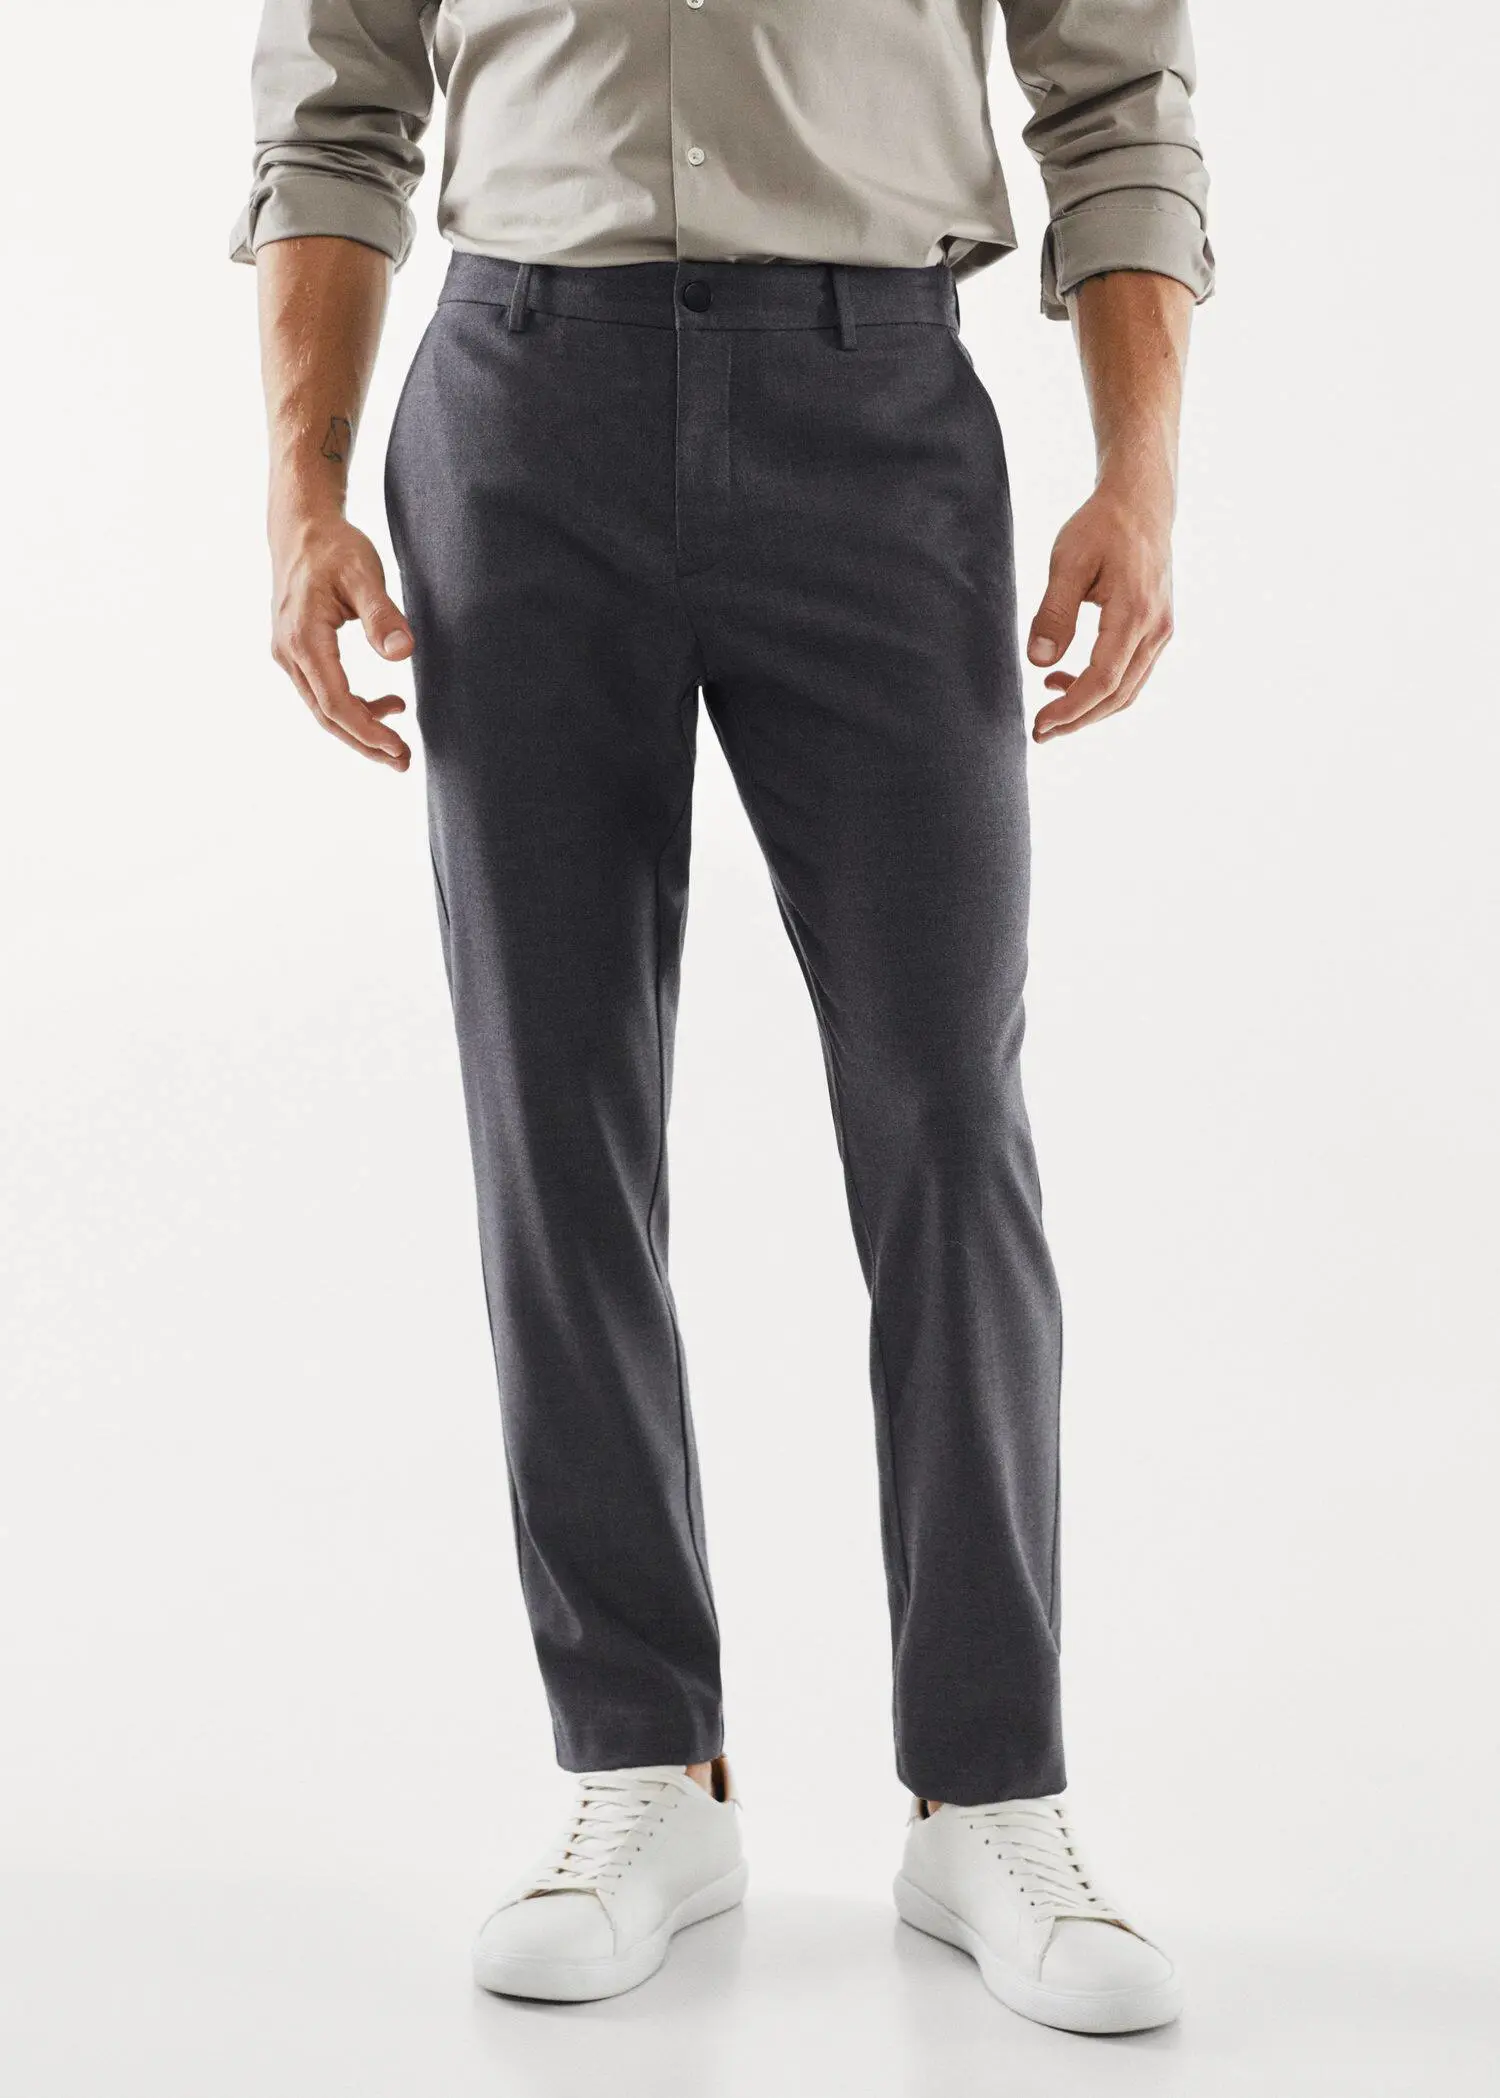 Mango Slim fit technical fabric pants. 2